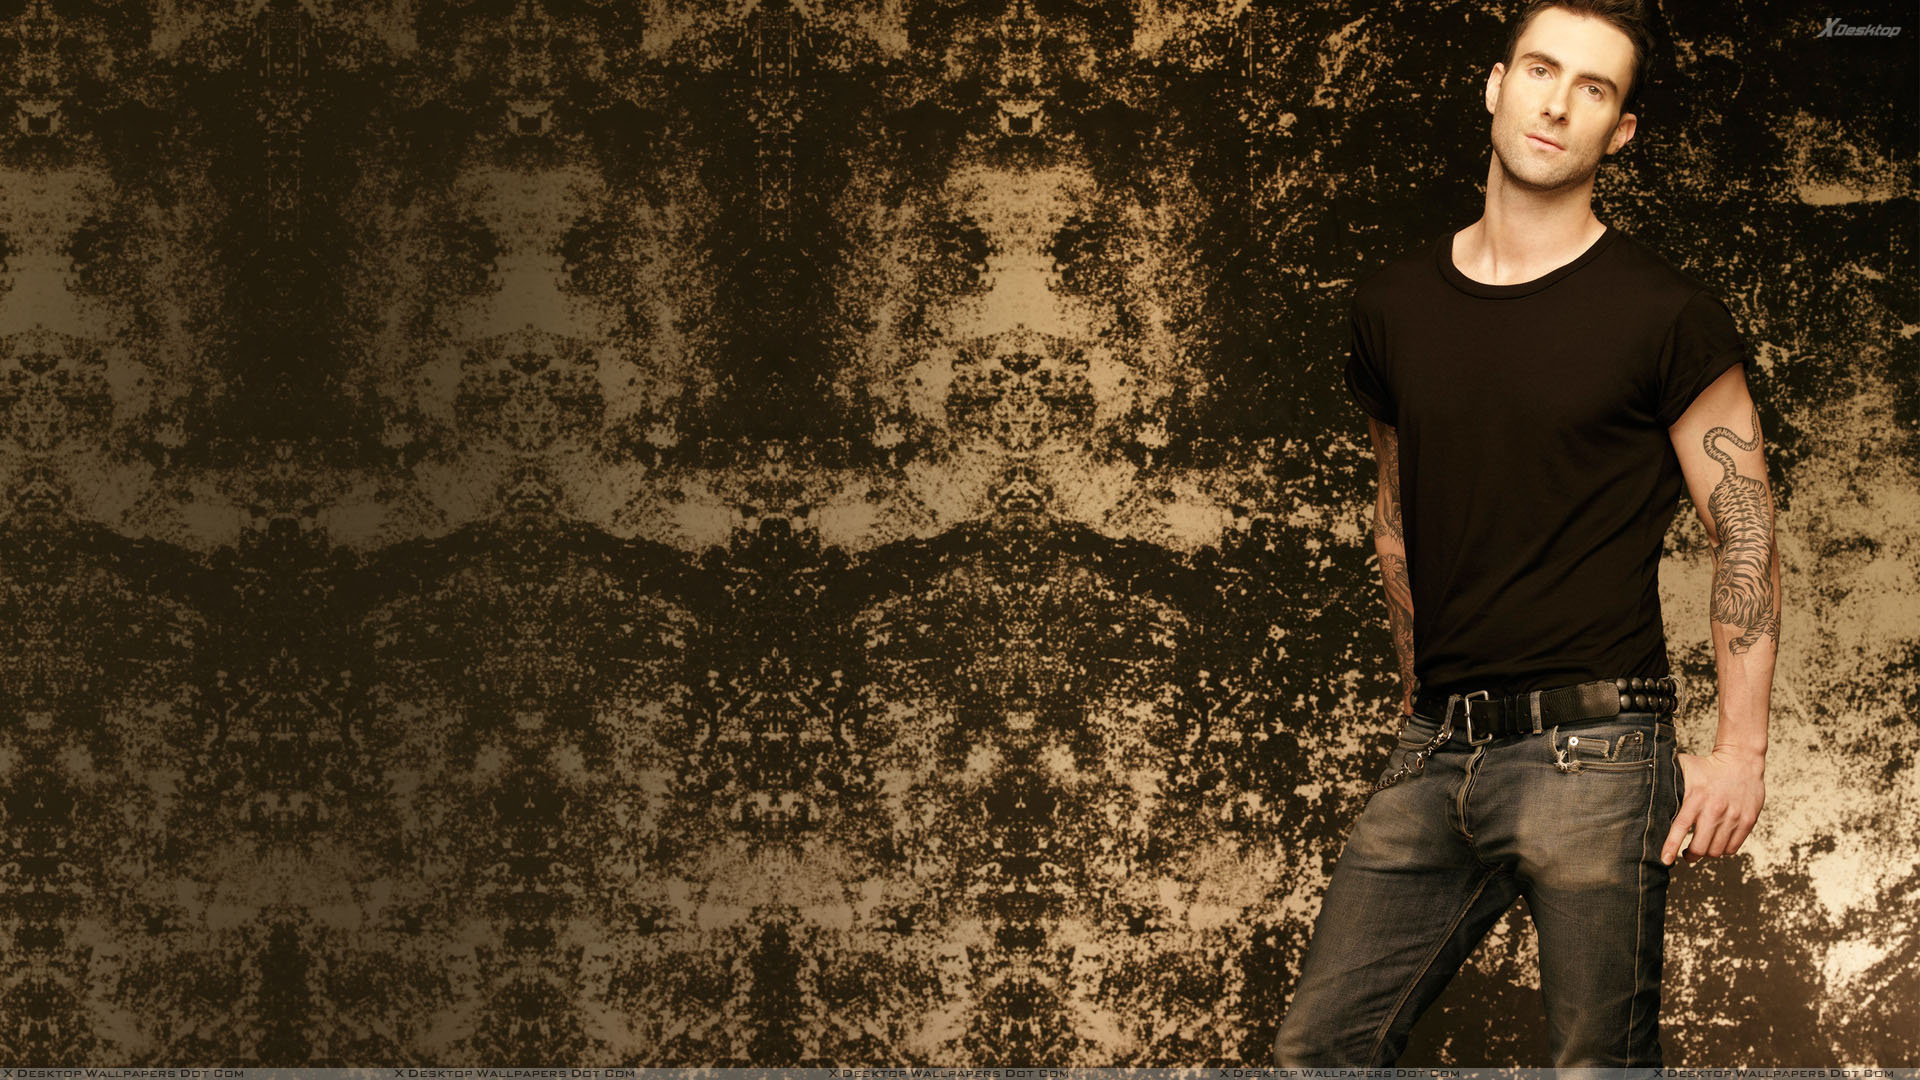 Free download Adam Levine in Black T shirt And Tatoo on Arm Wallpaper [1920x1080] for your Desktop, Mobile & Tablet. Explore Adam Levine Wallpaper. Adam Levine Wallpaper, Adam Thielen